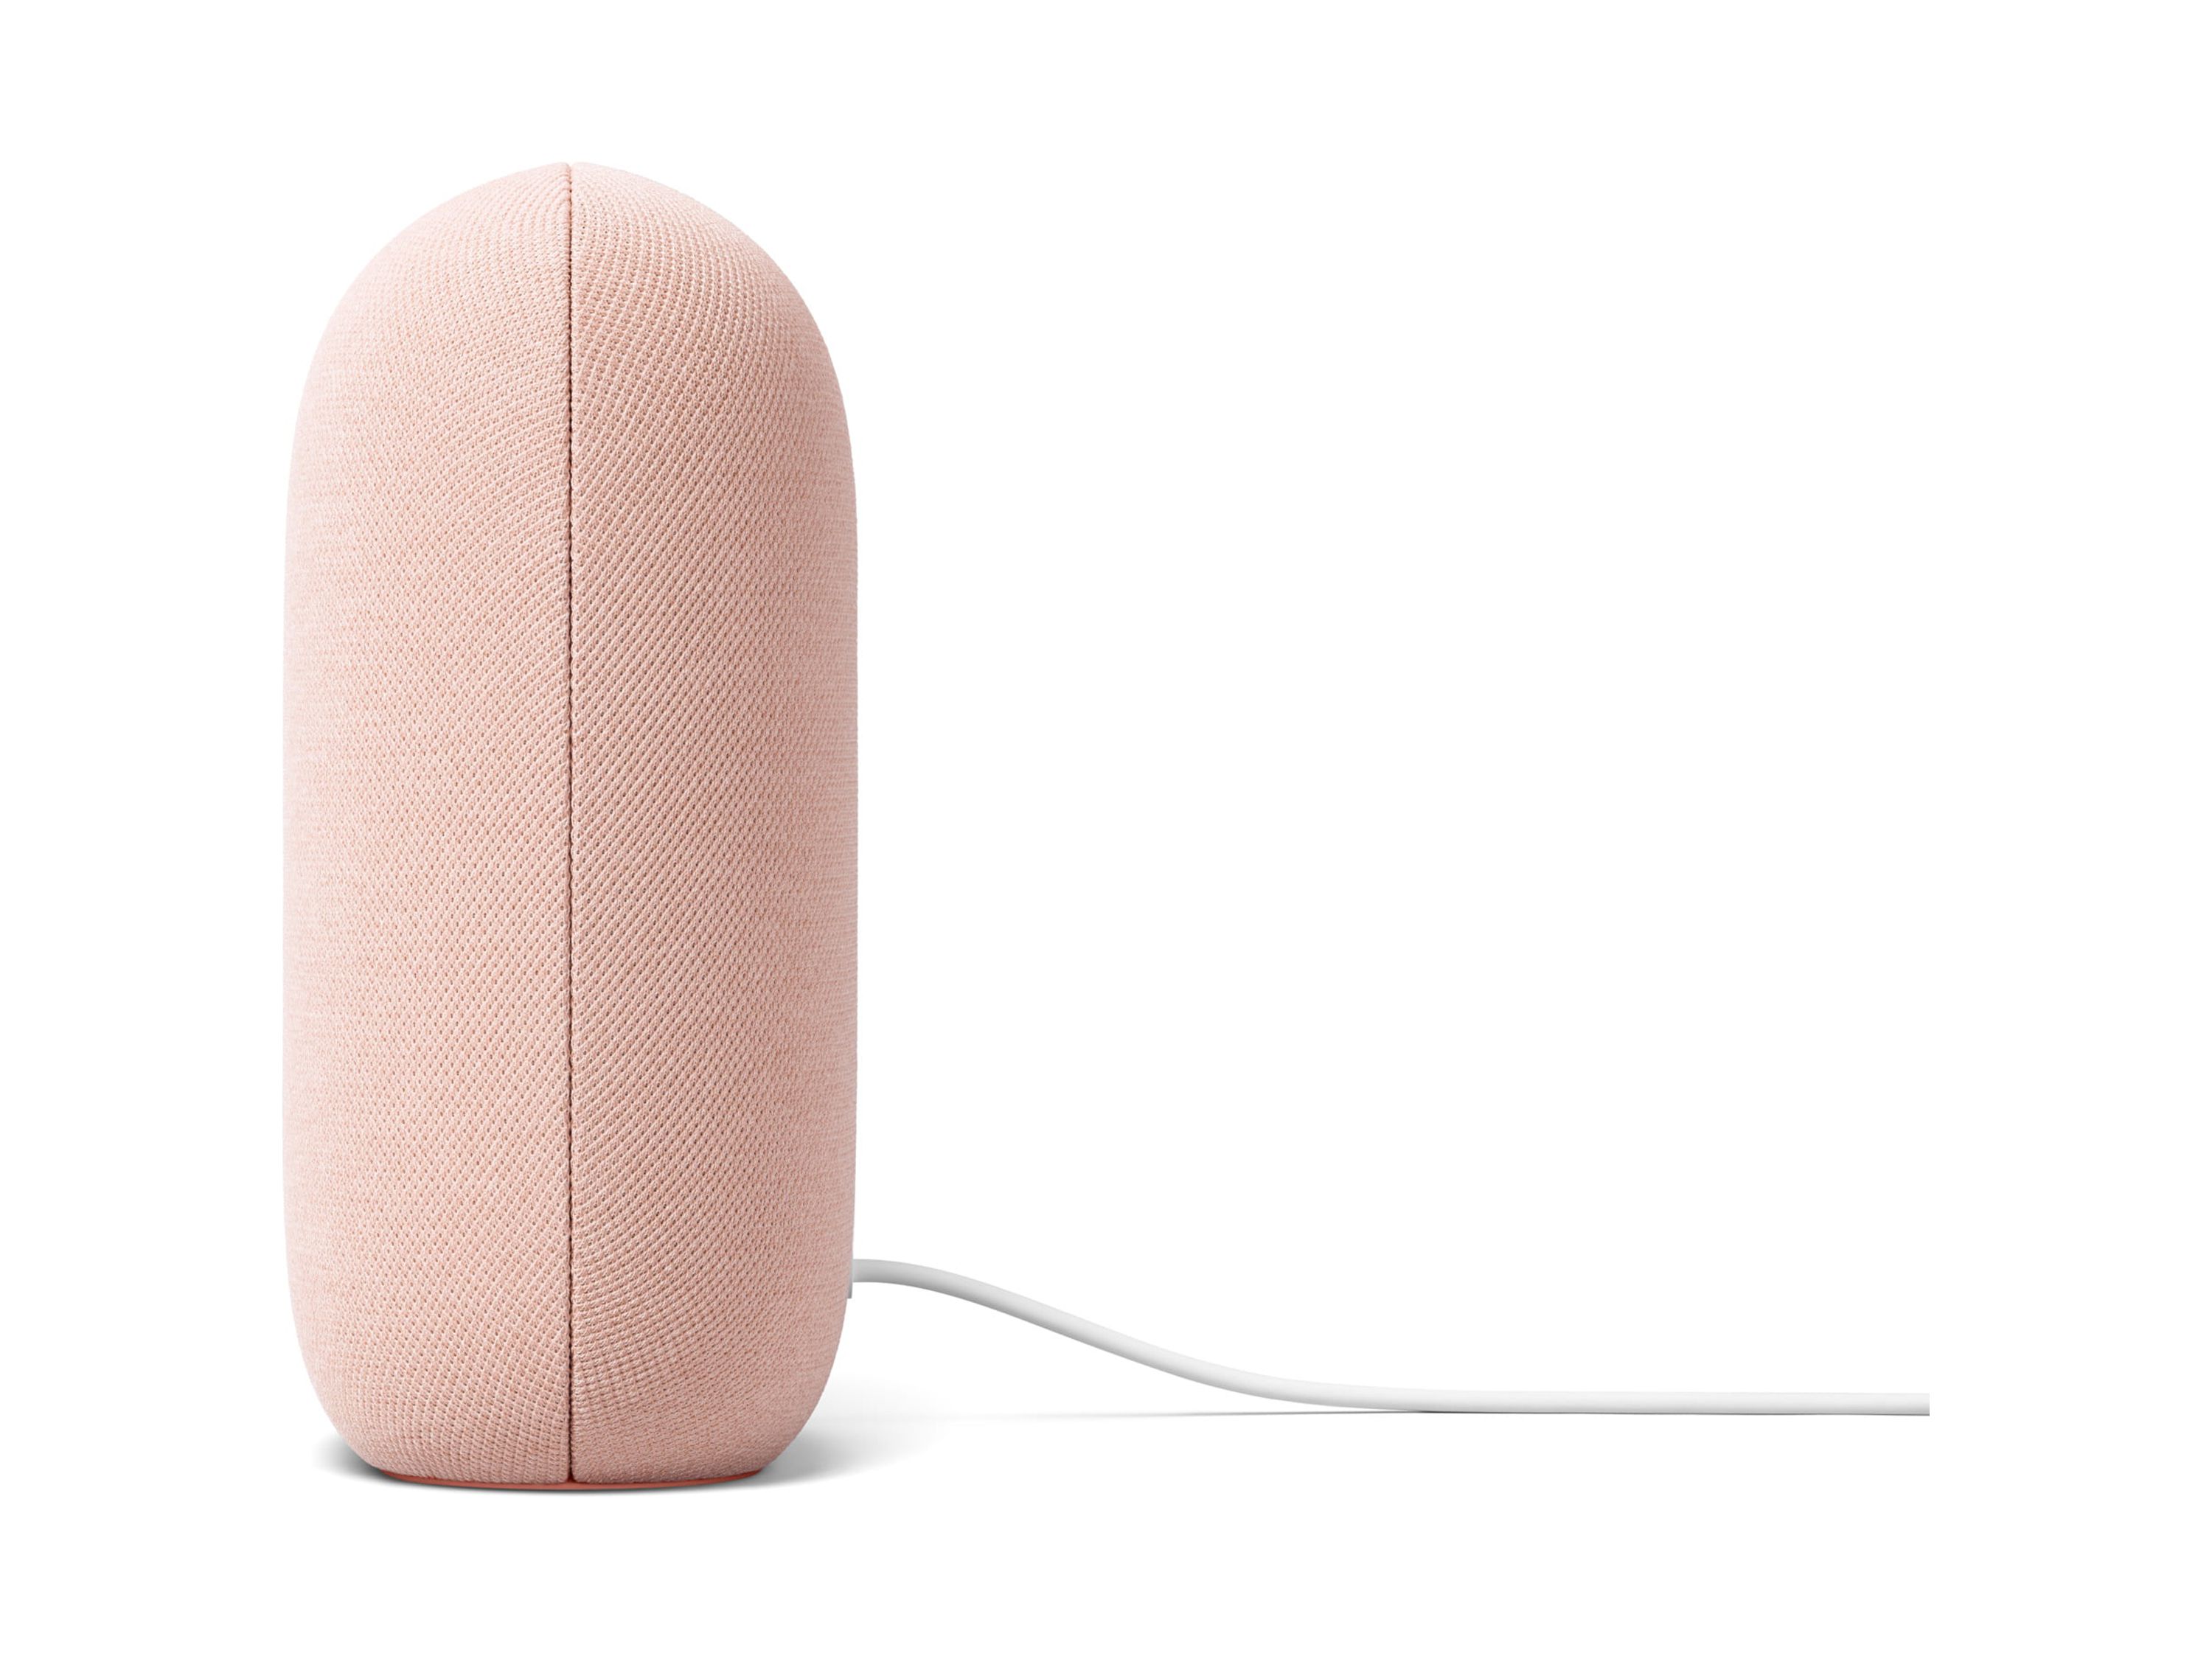 Google Nest Audio - Smart Speaker with Google Assistant - Sand - image 9 of 11